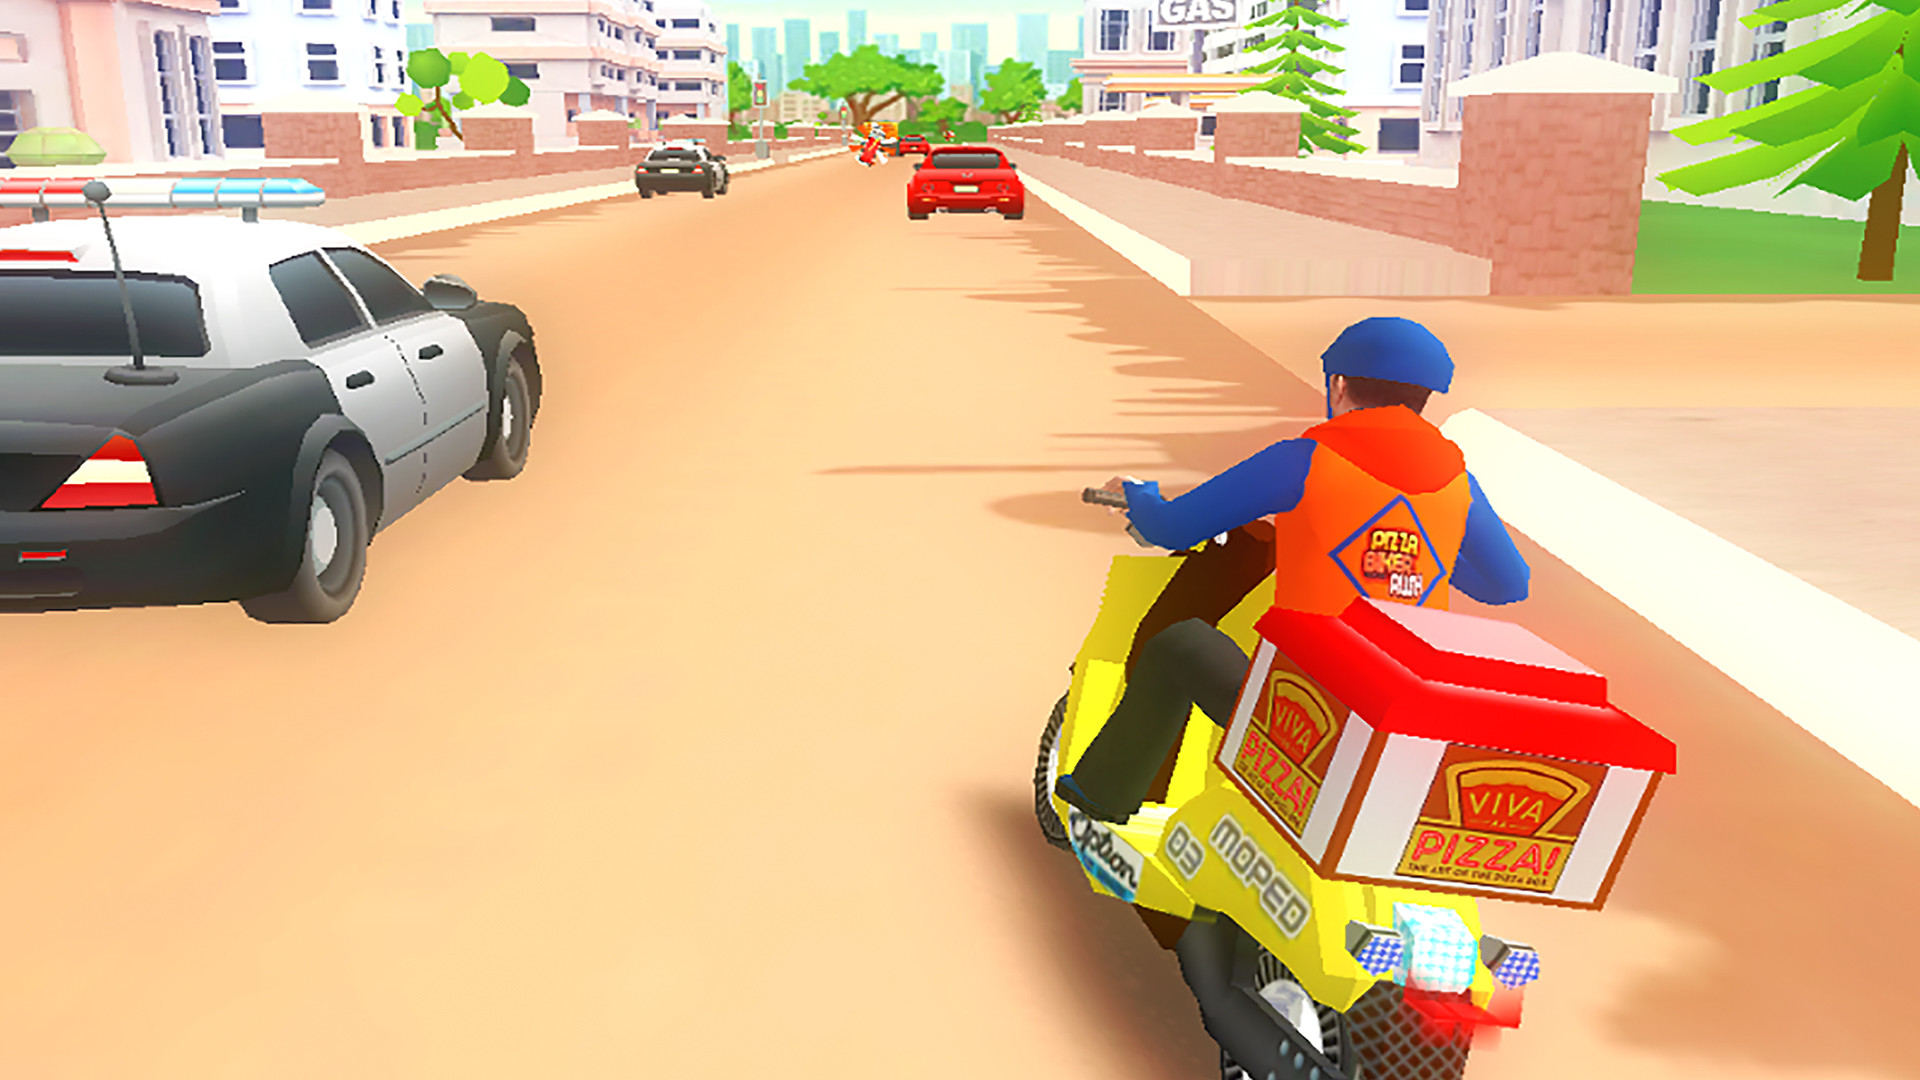 Pizza Bike Rider screenshot